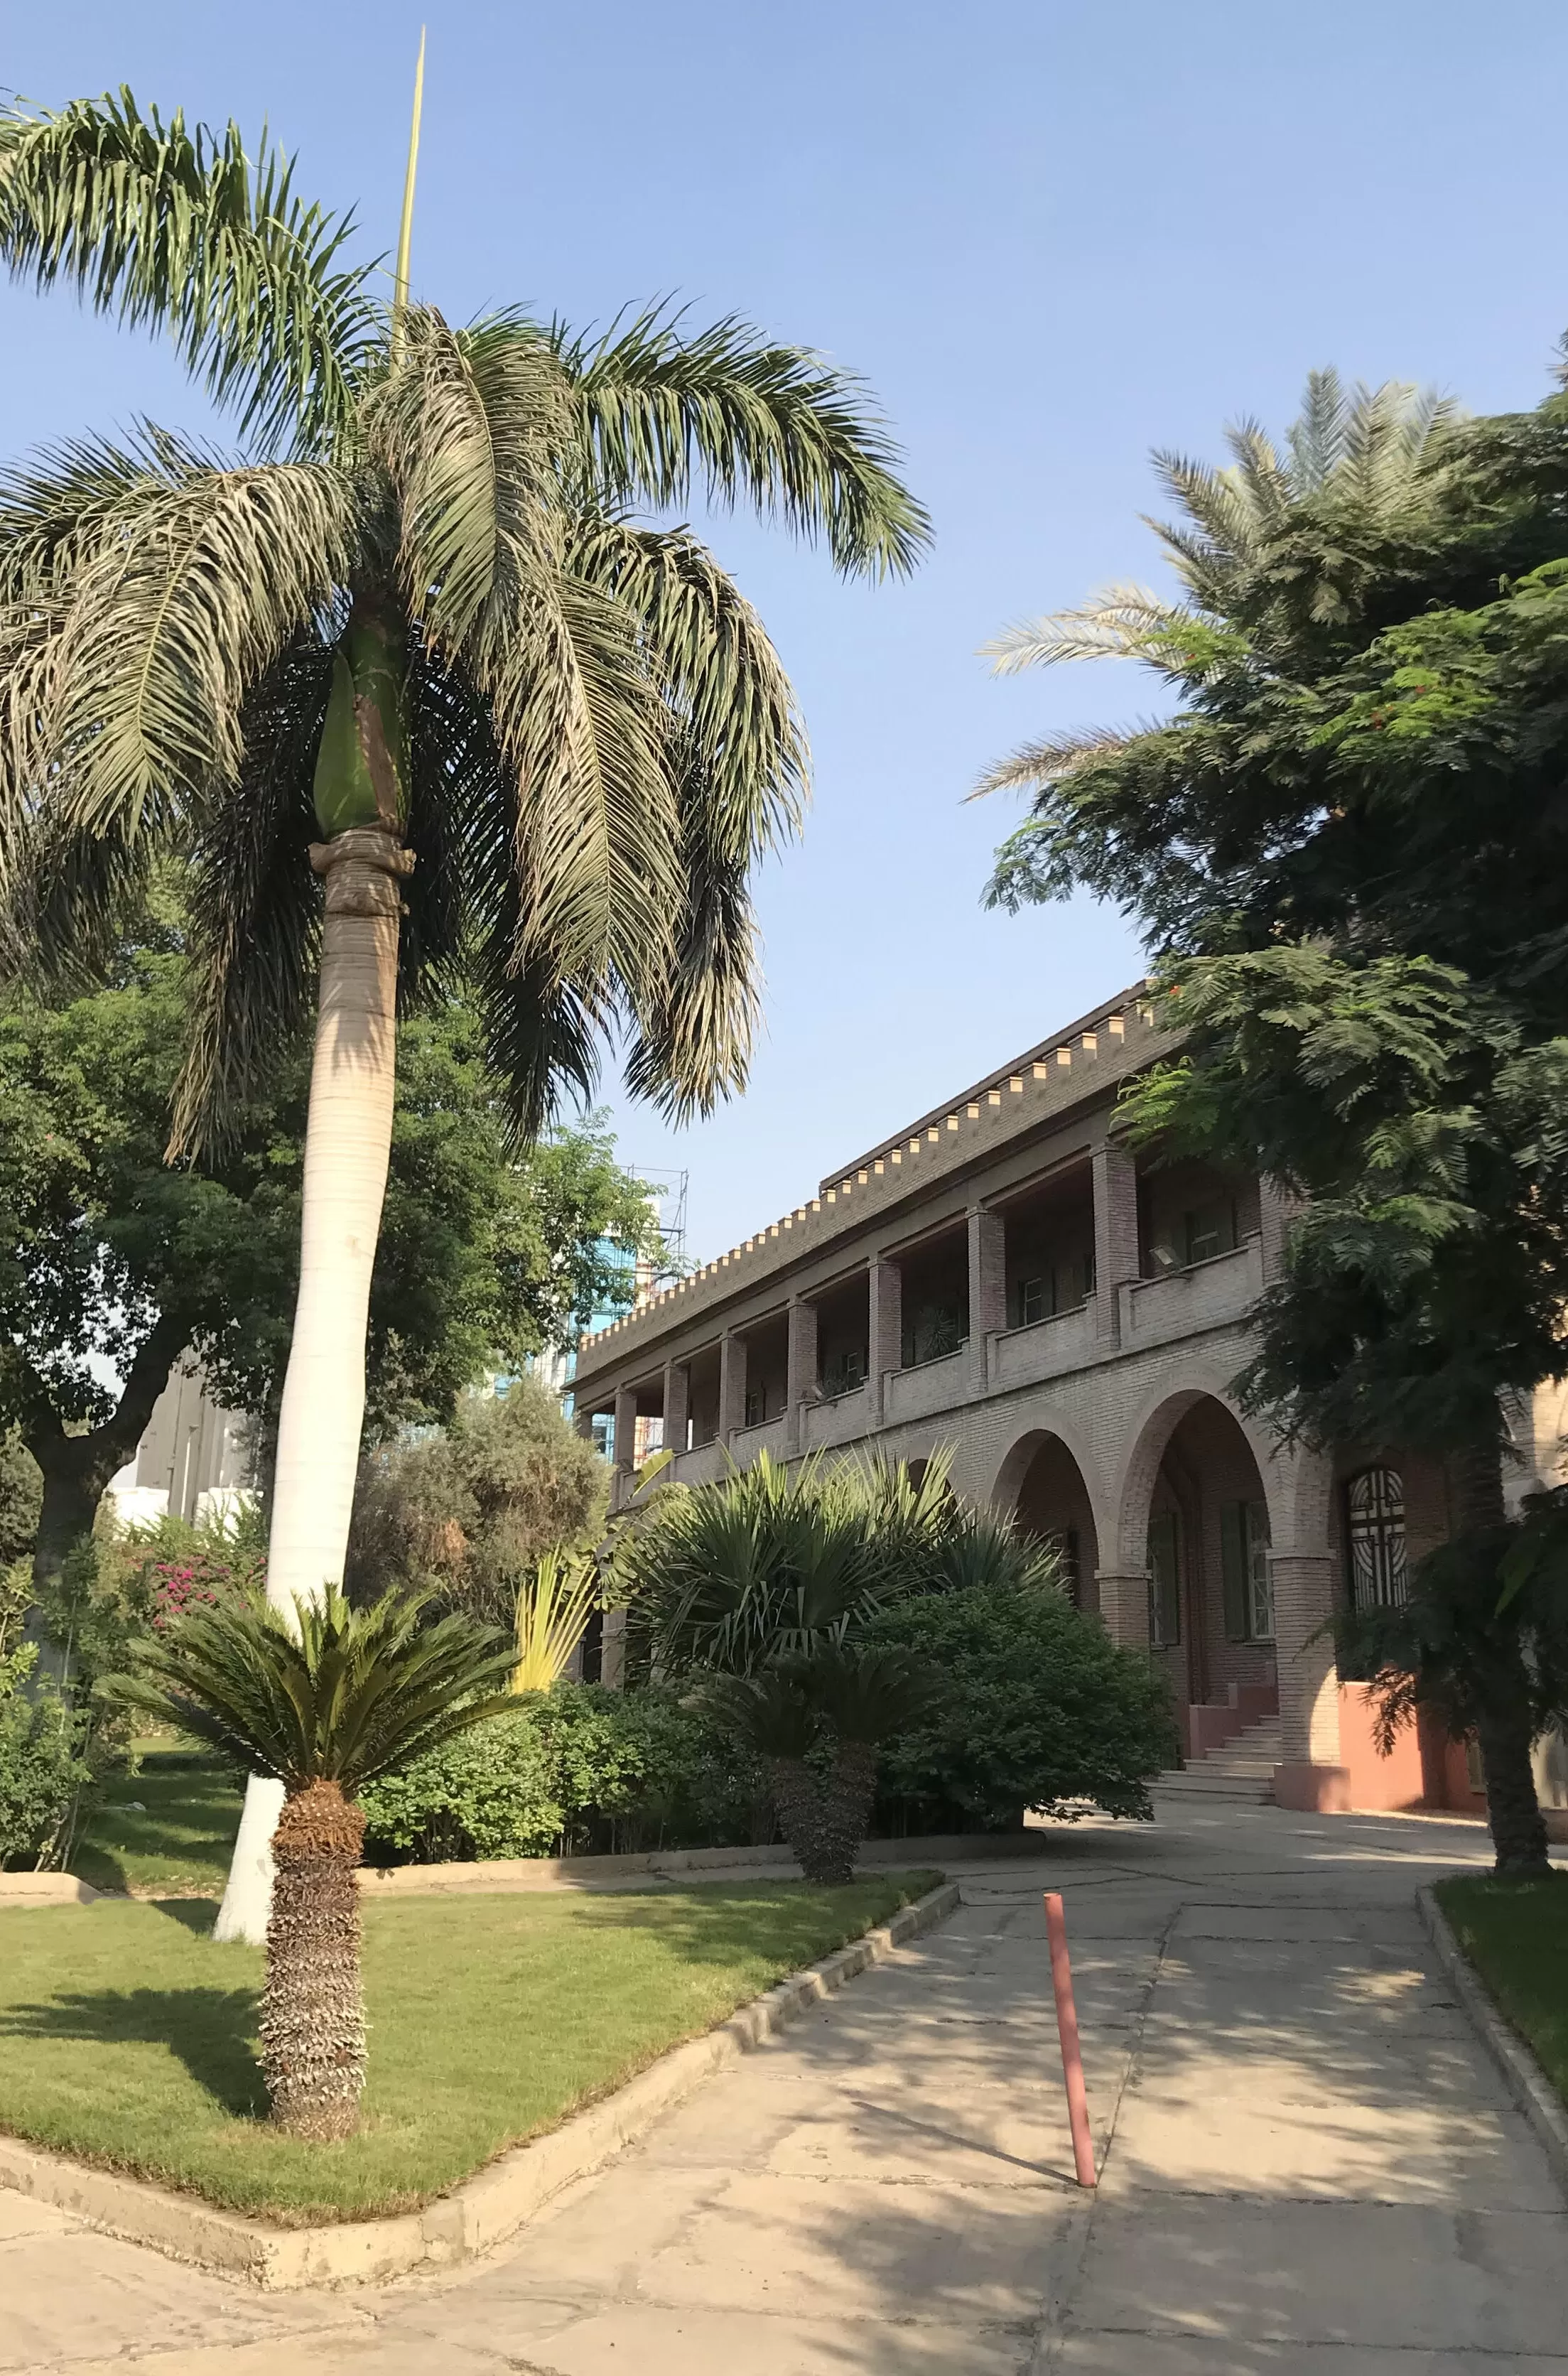 Reflexión de verano: estudiar árabe en El Cairo